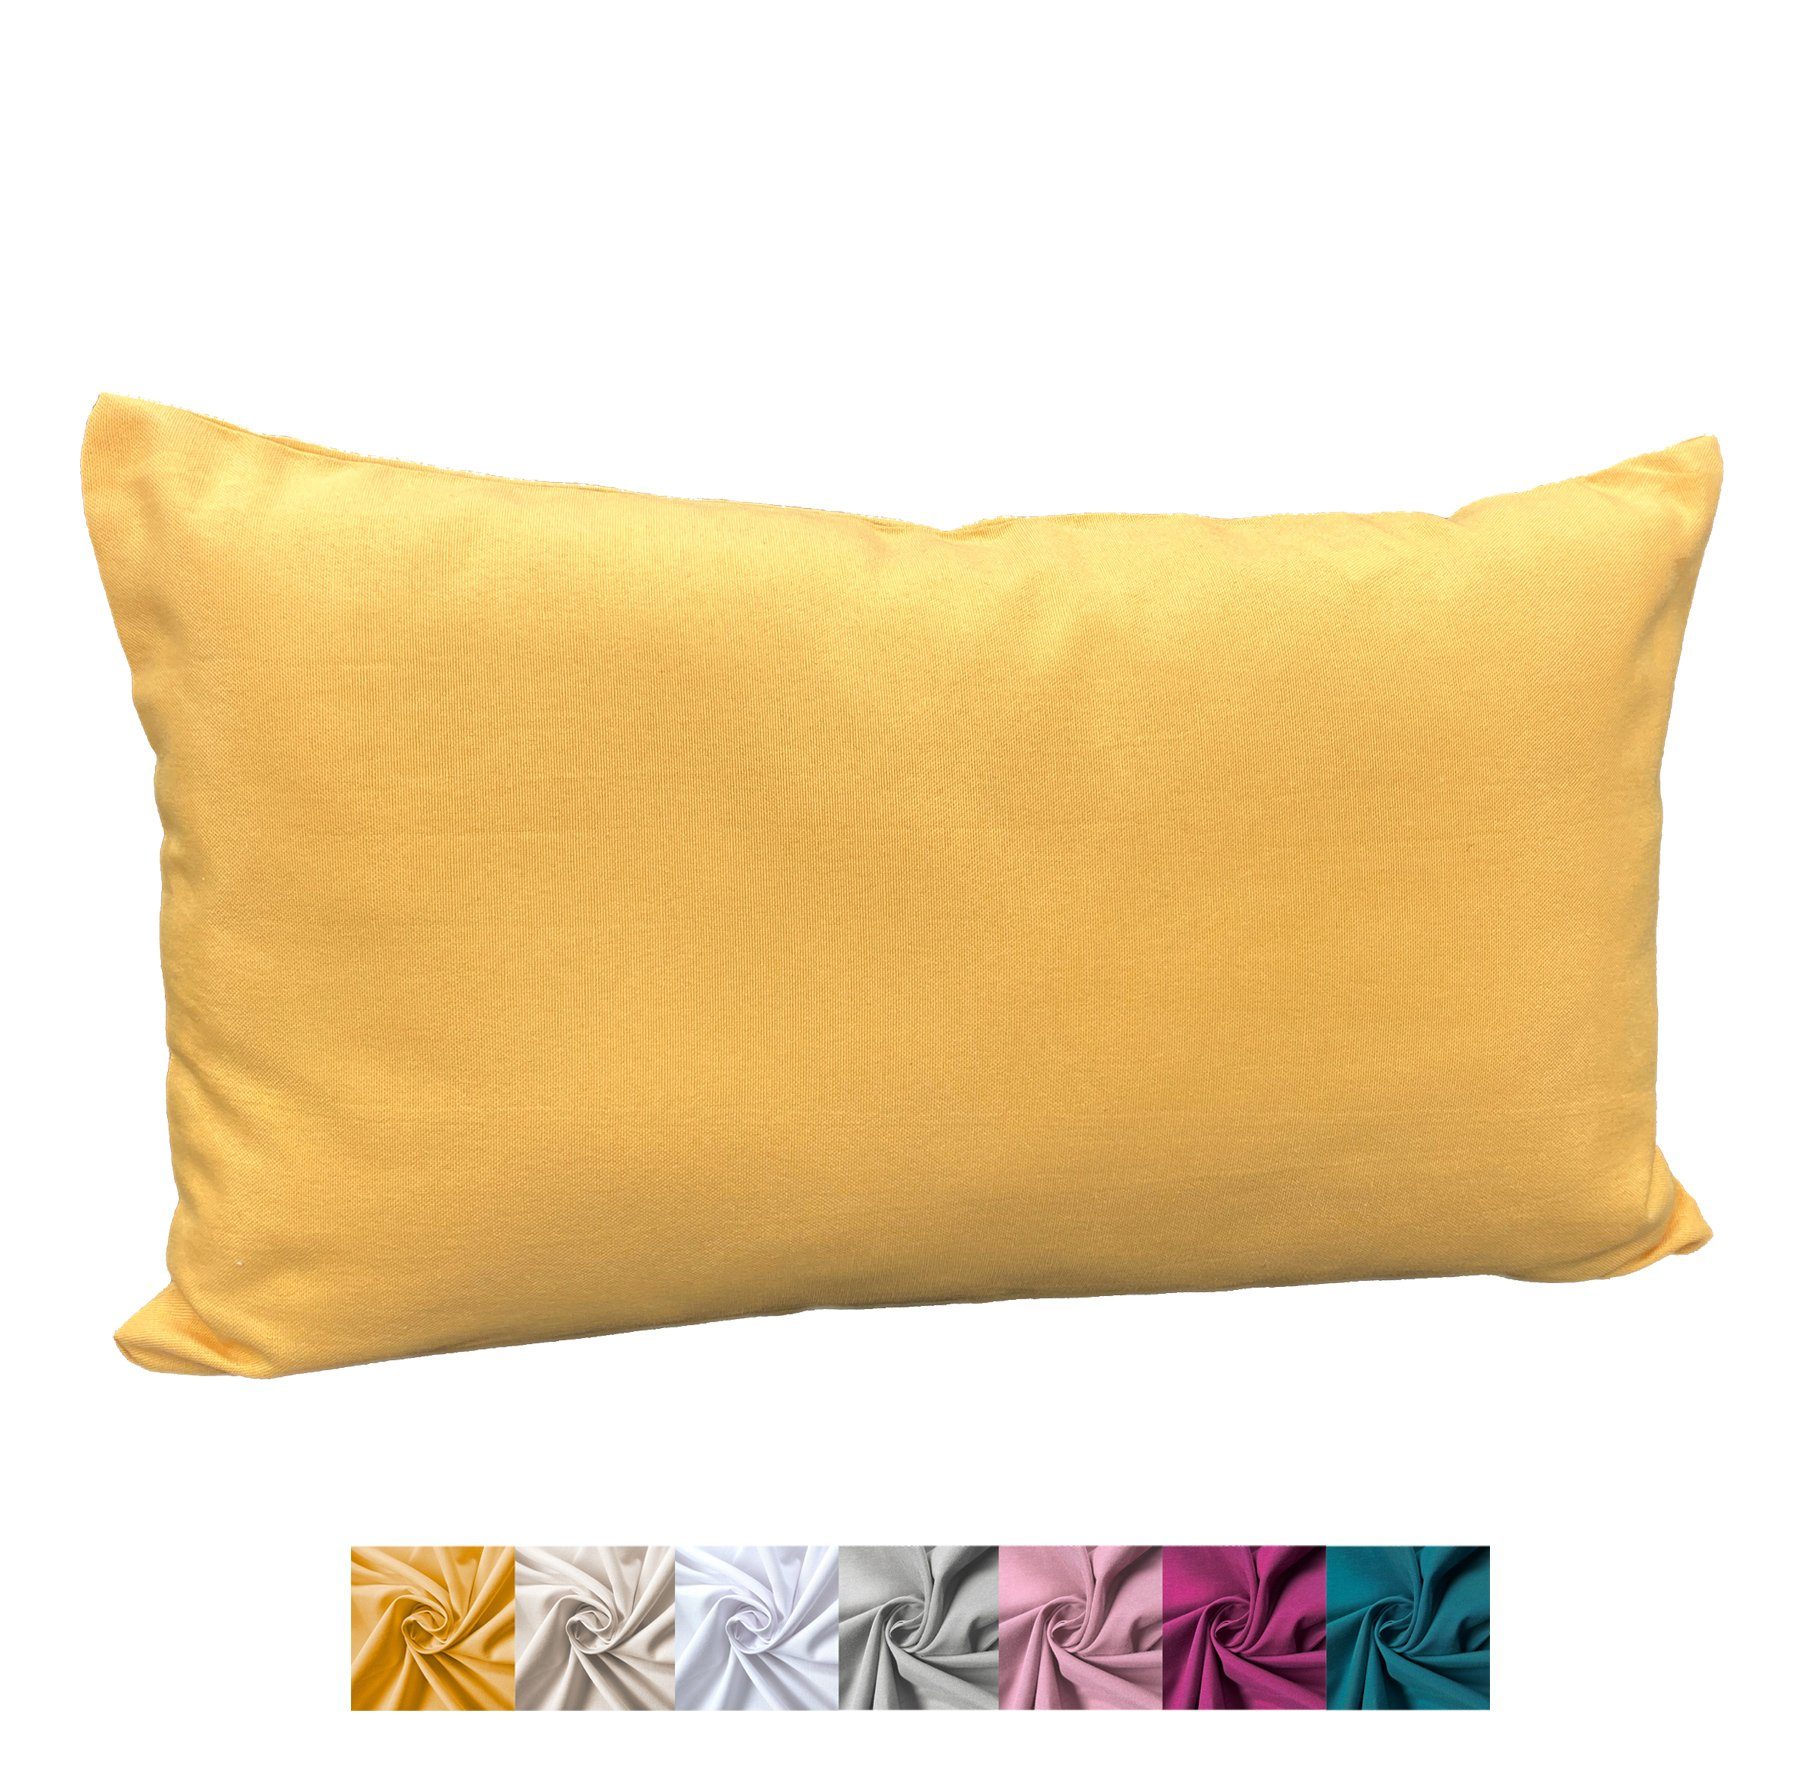 heimtexland Dekokissen Deko Kissenhülle Baumwolle Kissen Bezug Dekokissen, hochwertige Baumwoll-Qualität gelb